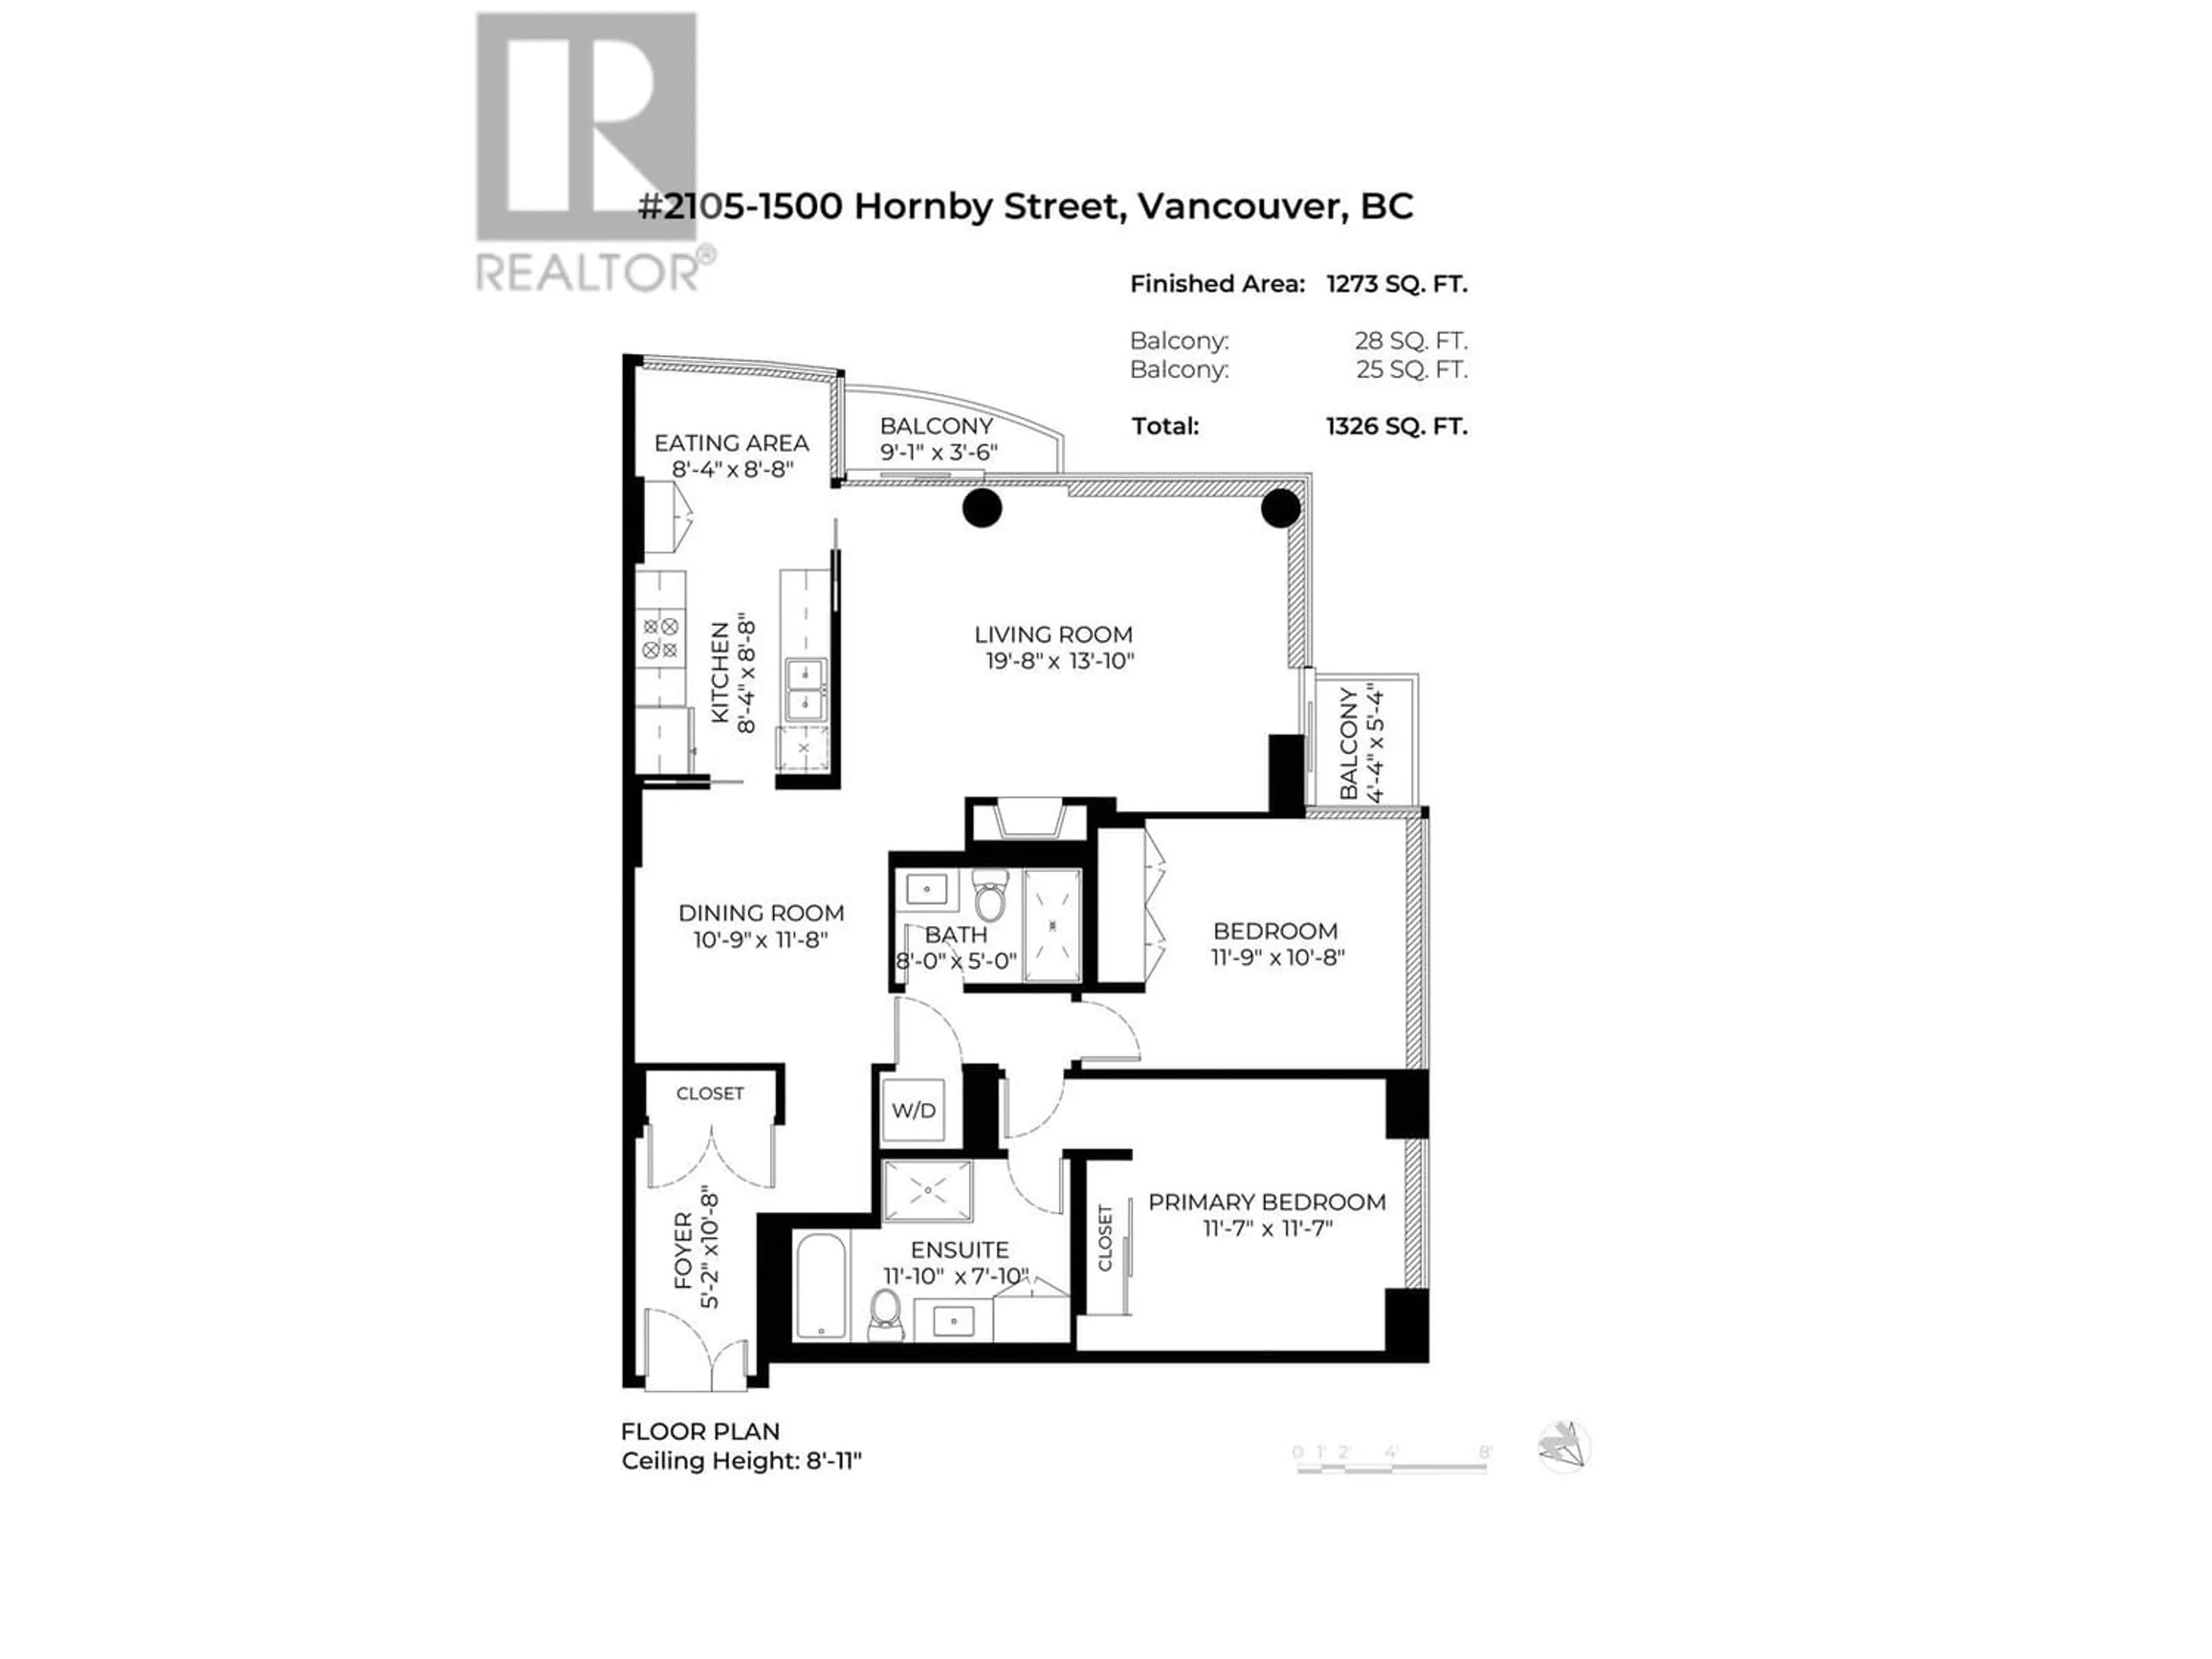 Floor plan for 2105 1500 HORNBY STREET, Vancouver British Columbia V6Z2R1